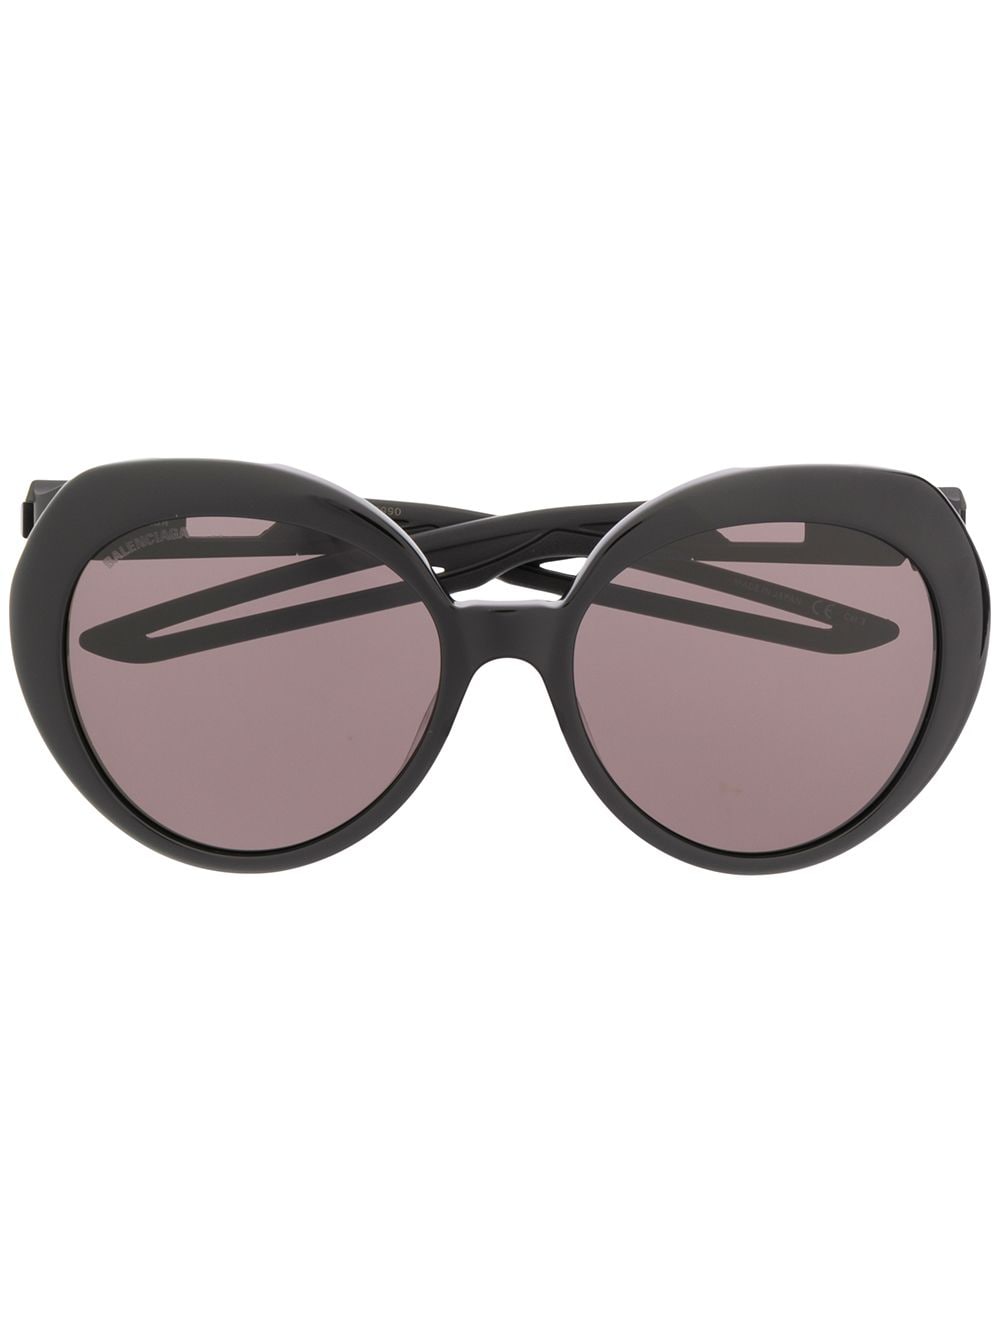 фото Balenciaga солнцезащитные очки-бабочки Hybrid